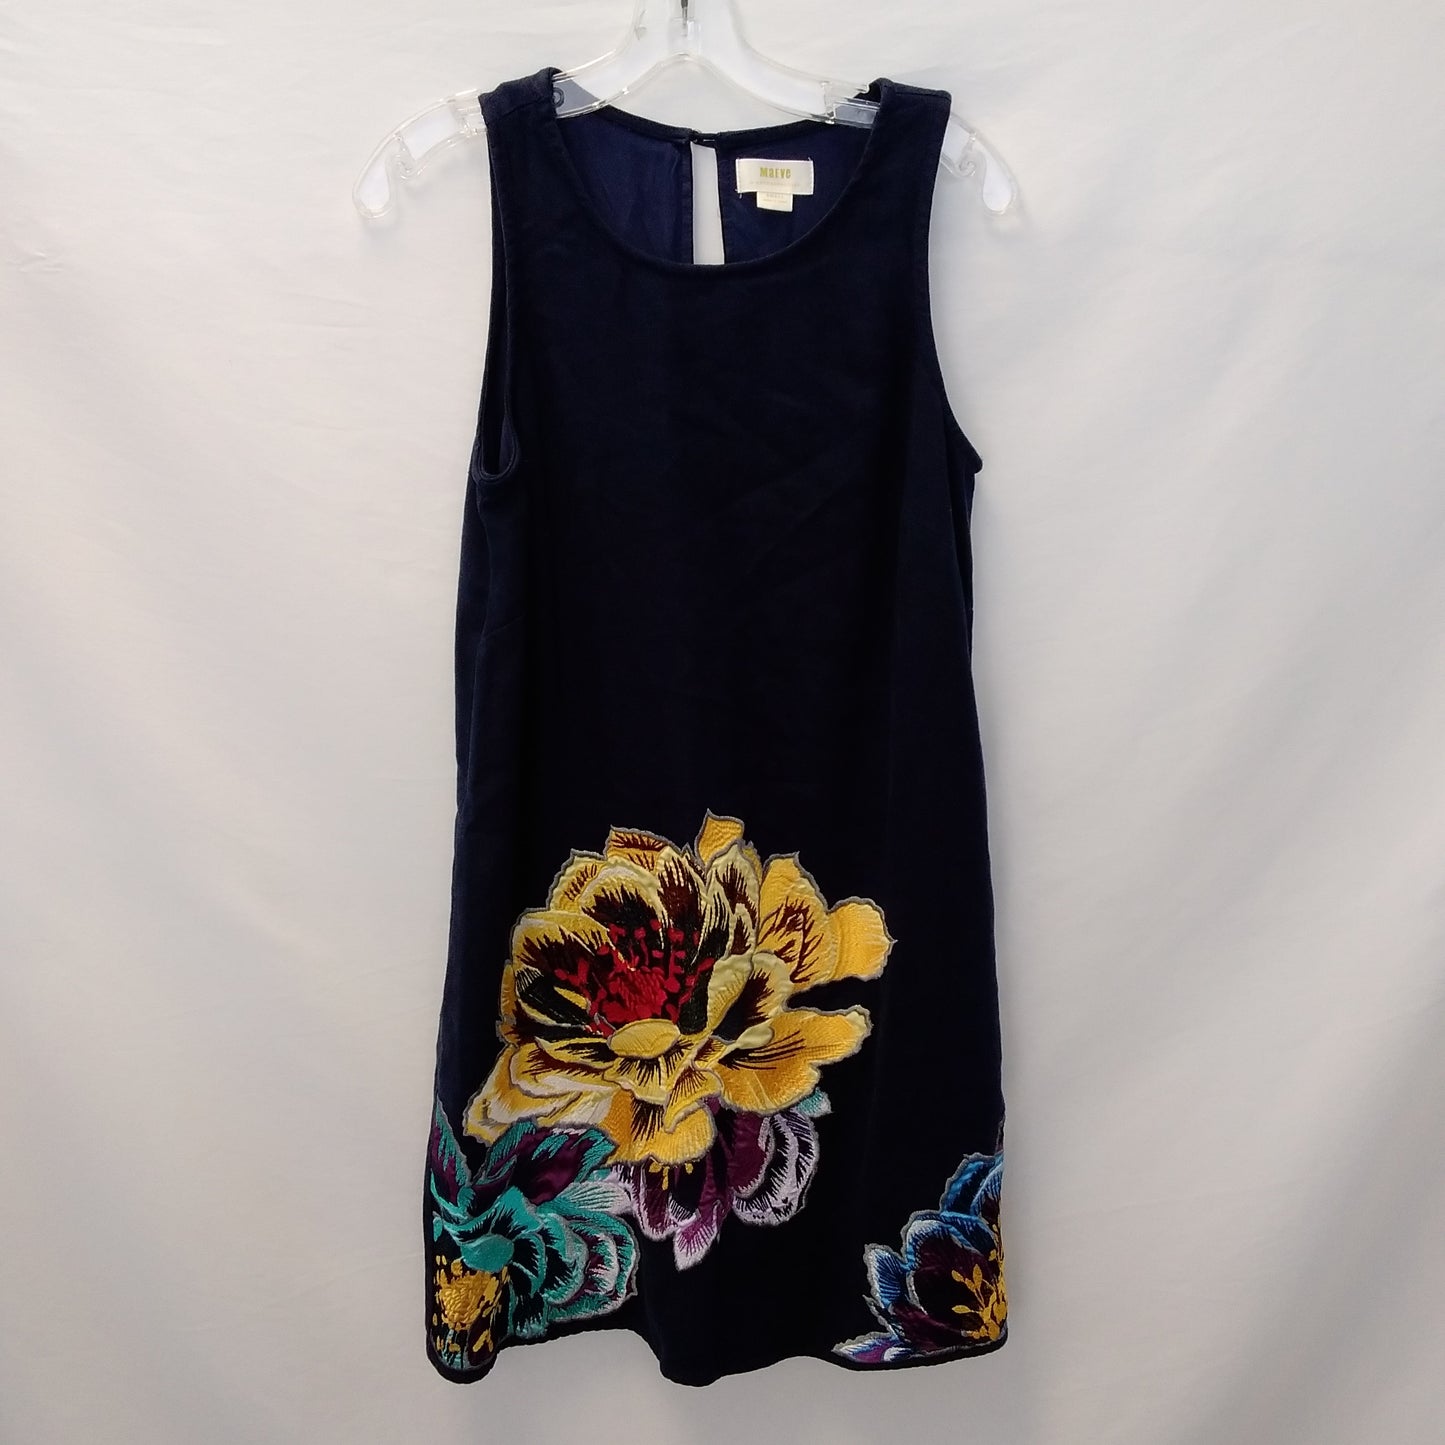 Anthropologie Maeve Royal Blue Embroidered Floral Dress - S